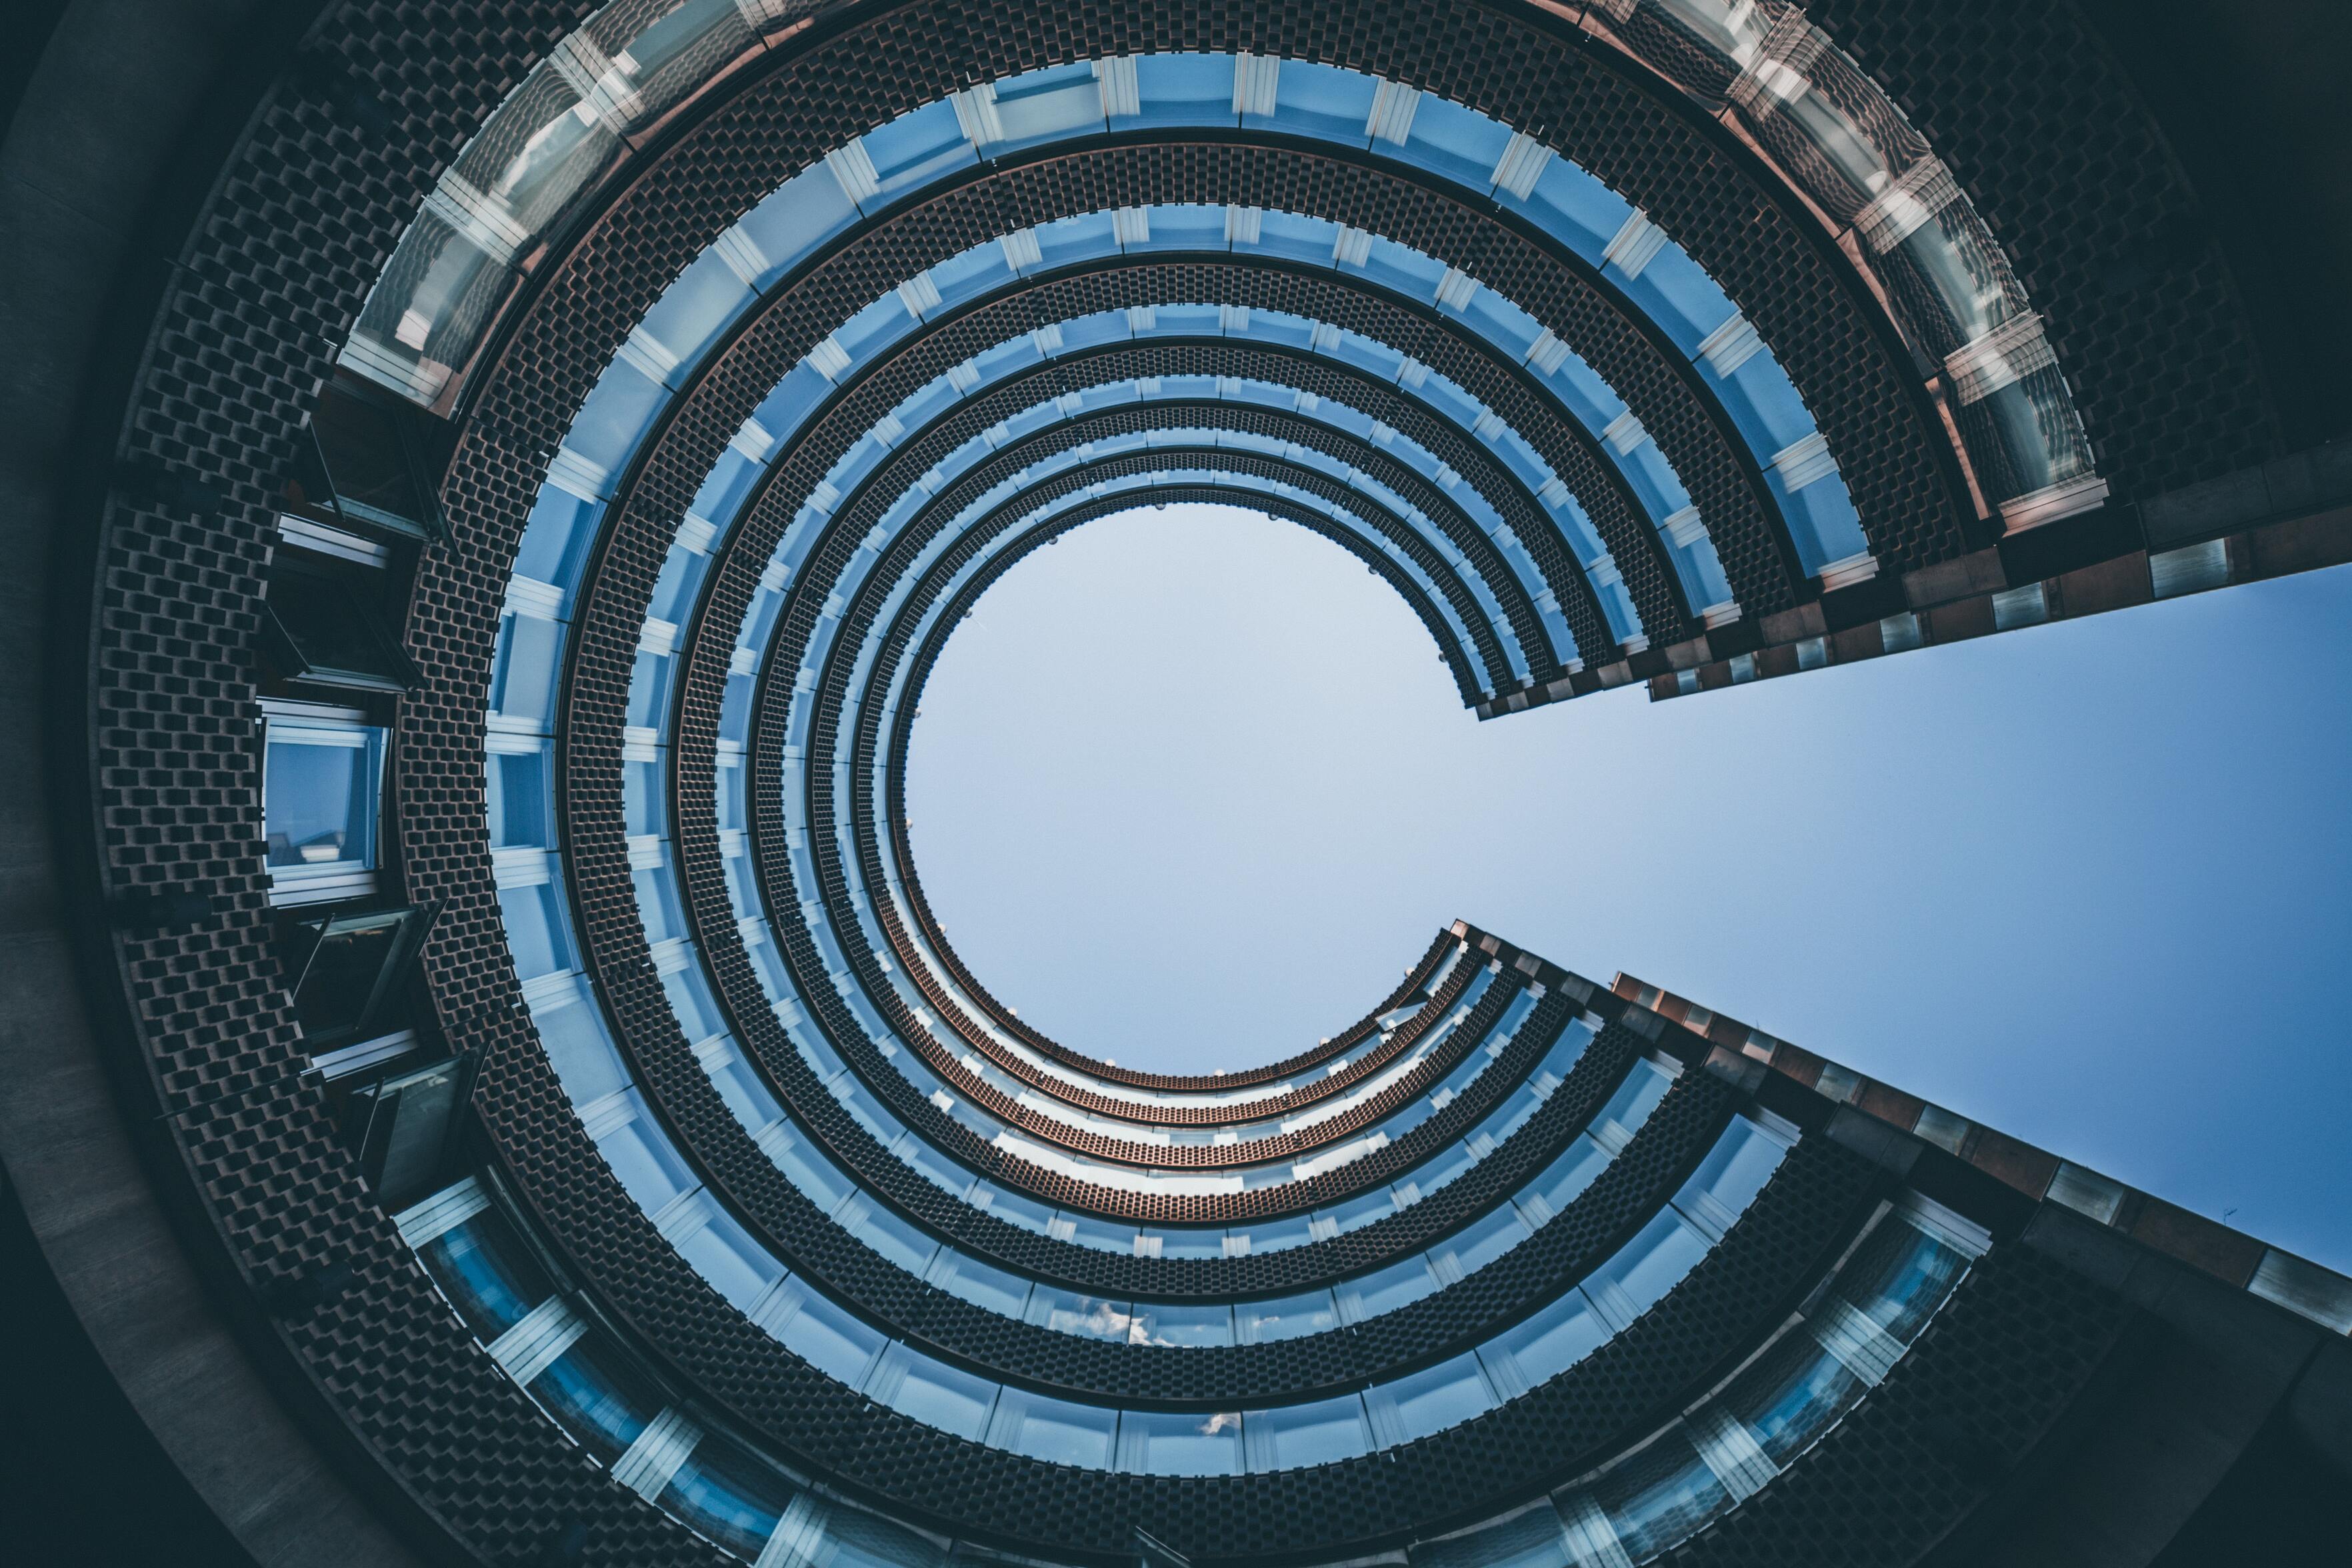 Circular shaped building seen from below